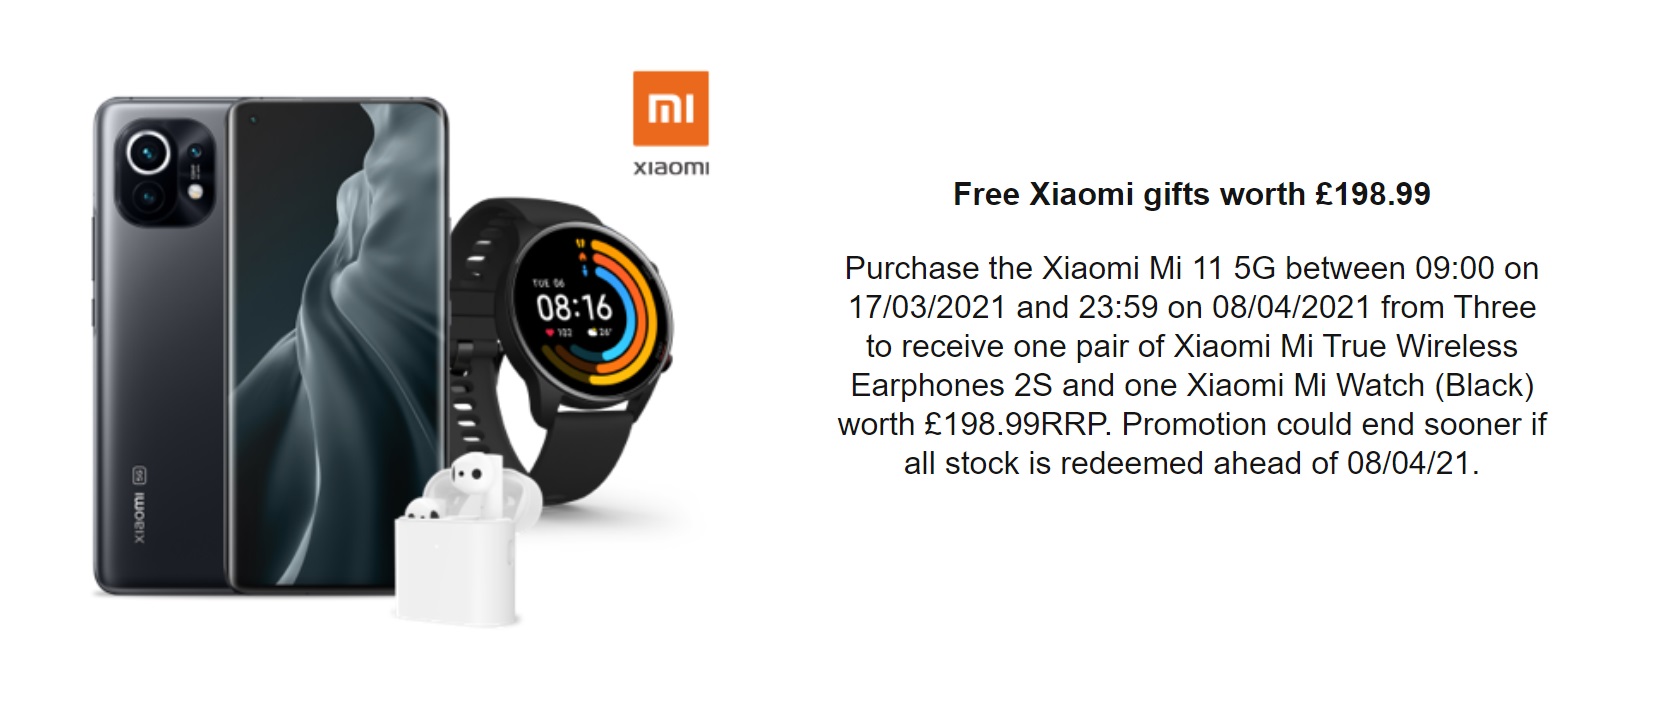 Xiaomi Mi 11 Deals with Free Xiaomi Mi True Wireless Earphones 2S and one Xiaomi Mi Watch